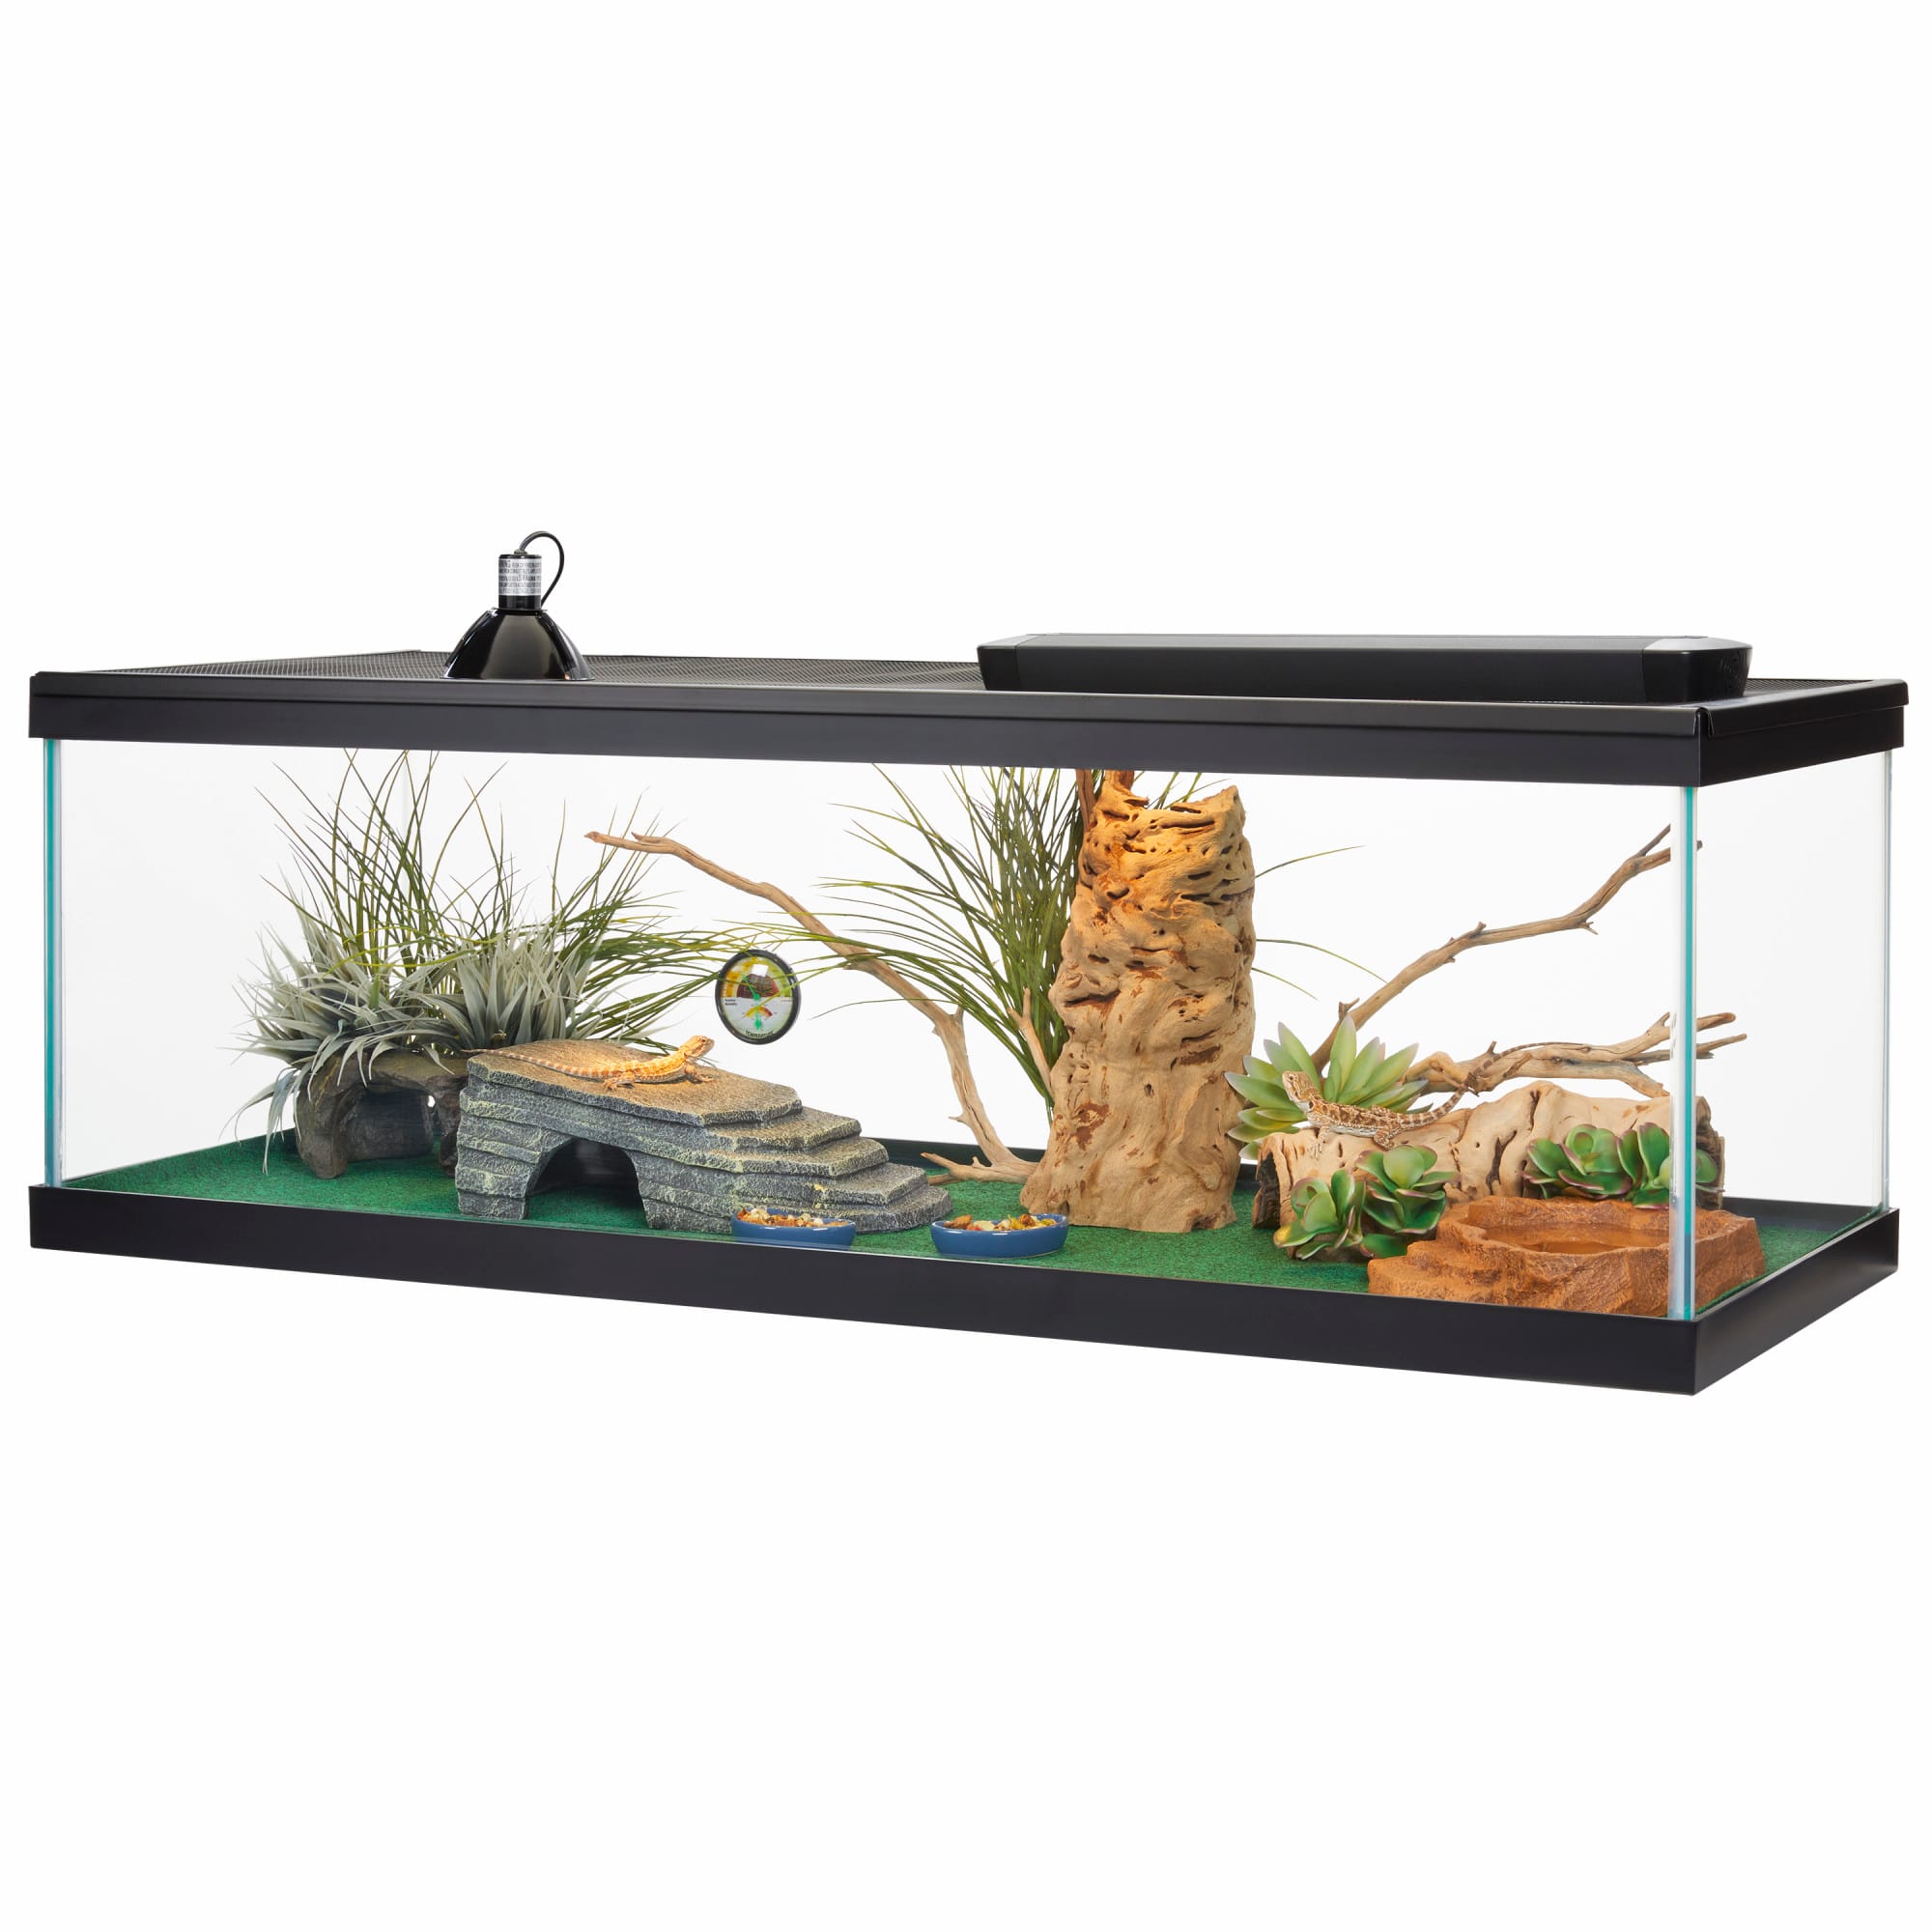 Aqueon Standard Open-Glass Glass Aquarium Tank, 60 Gallon